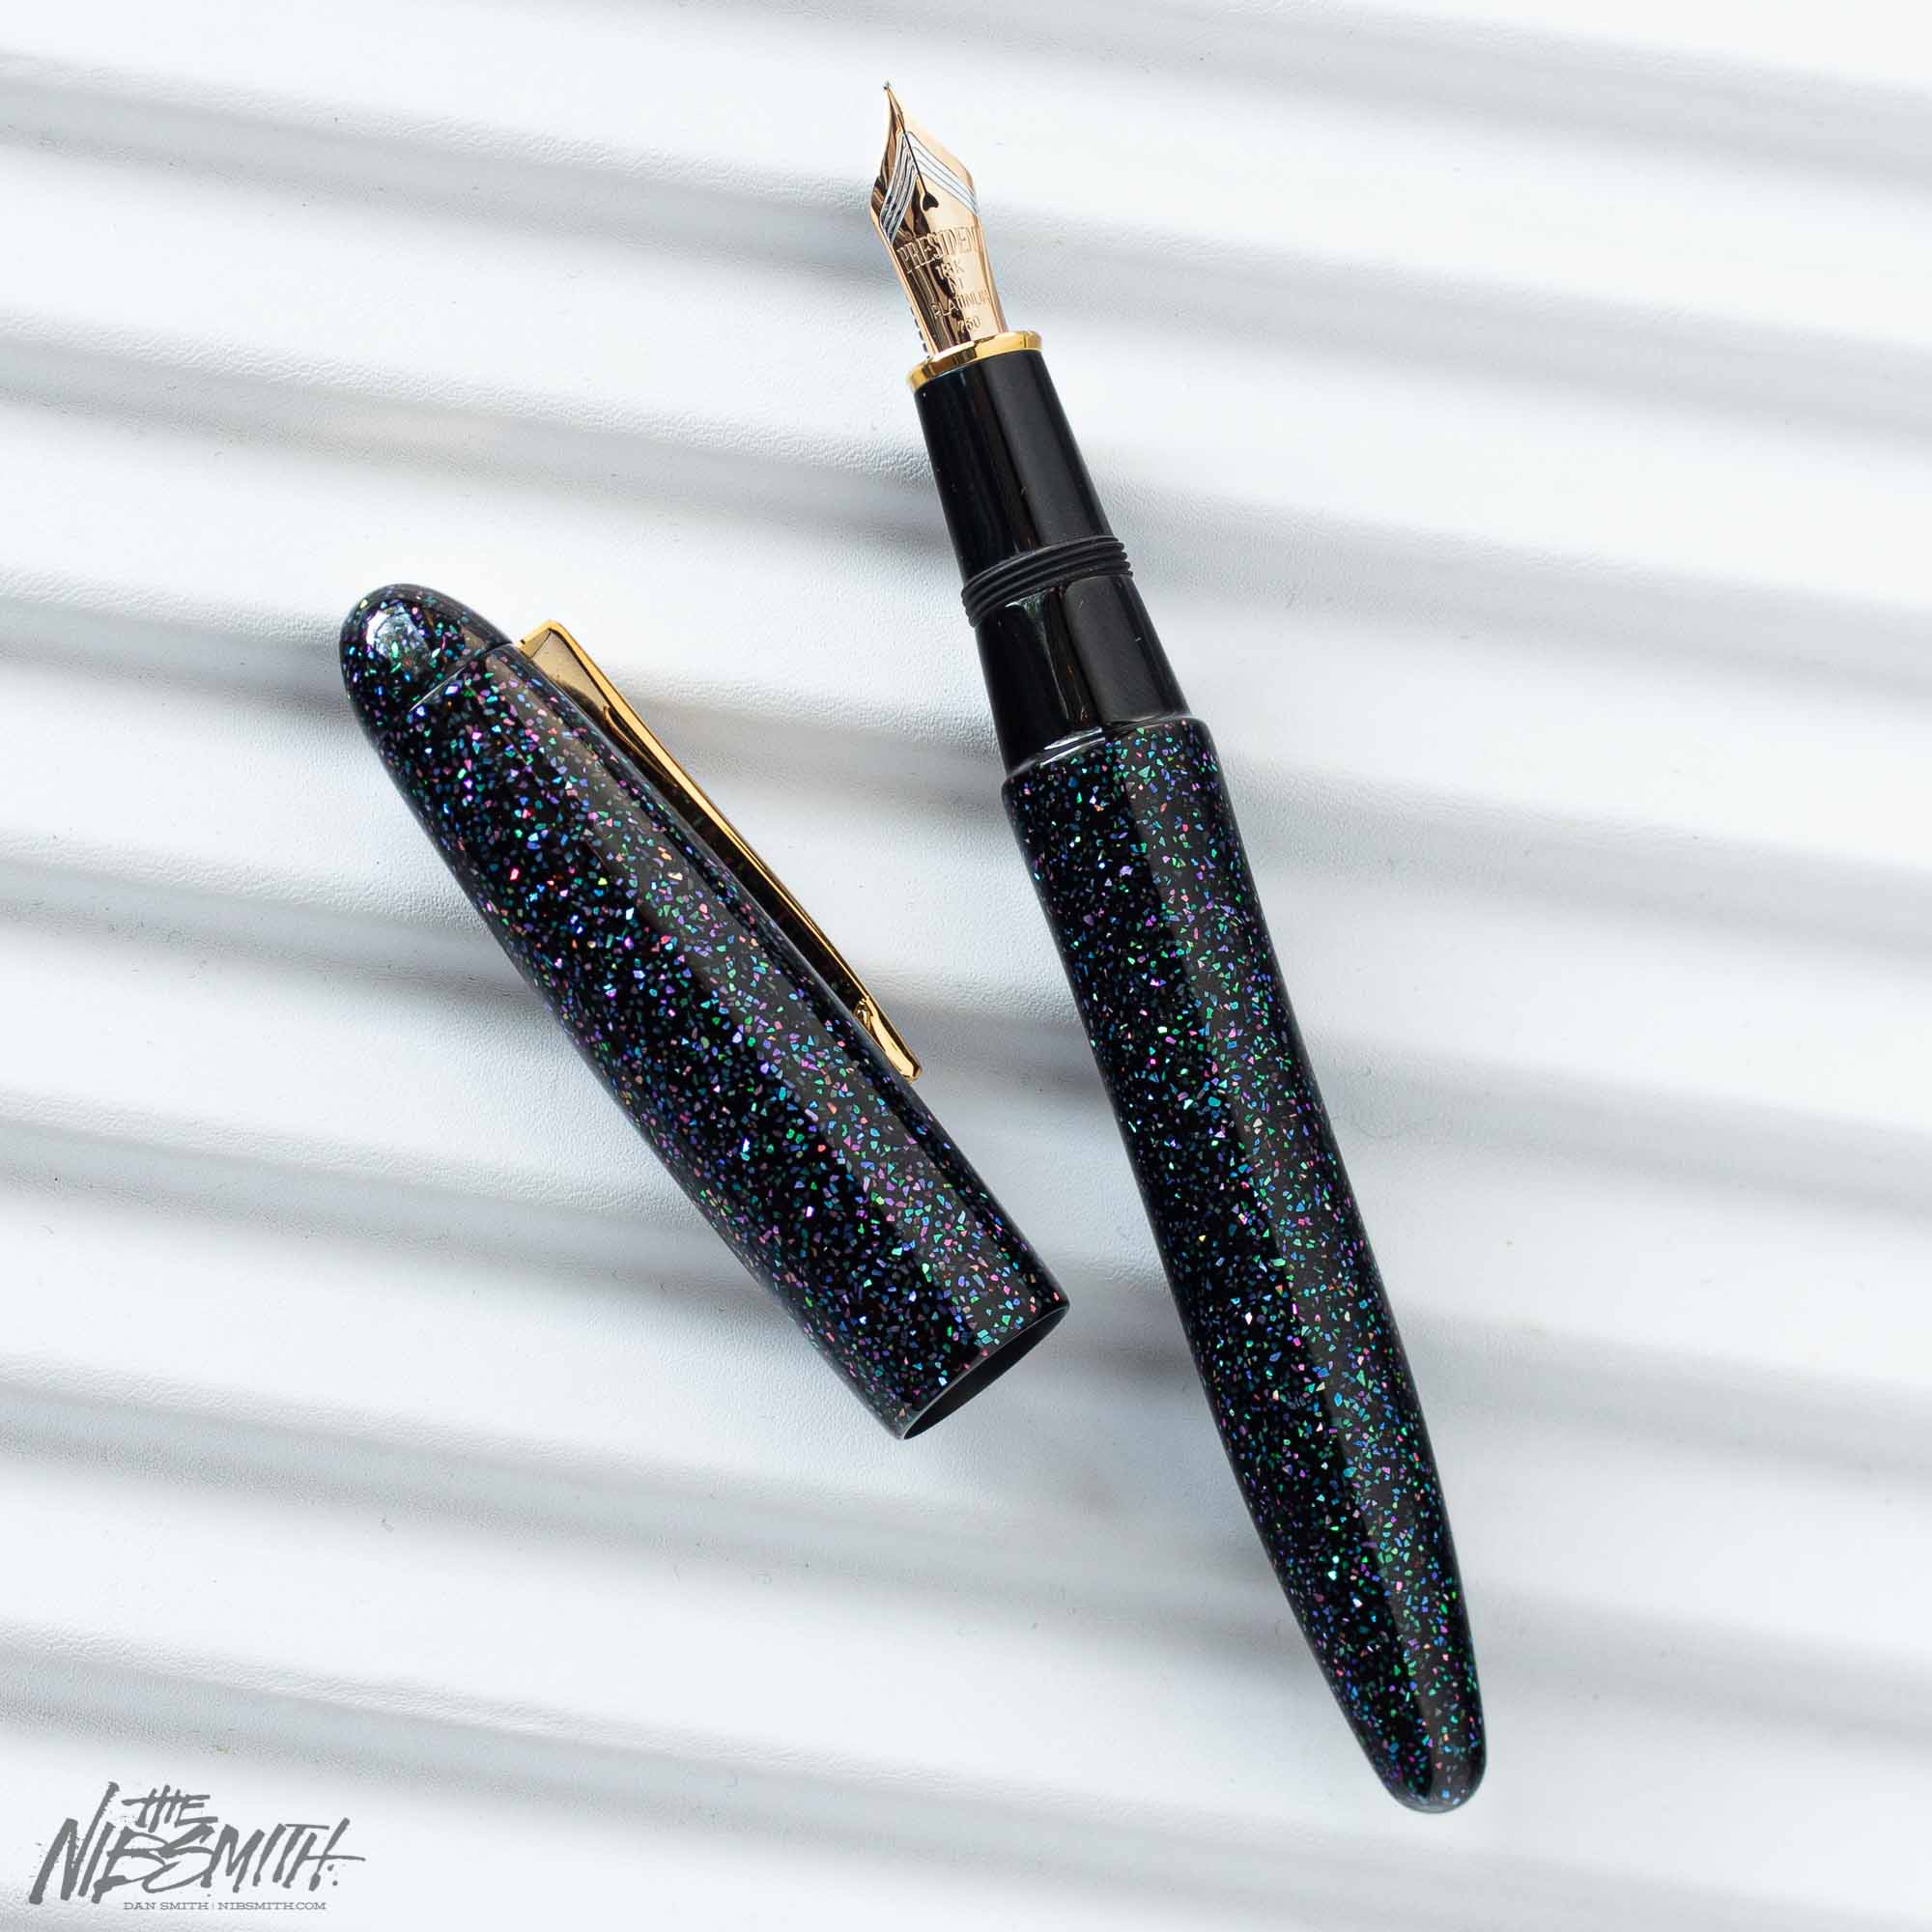 Platinum Izumo Raden Galaxy Fountain Pen – The Nibsmith